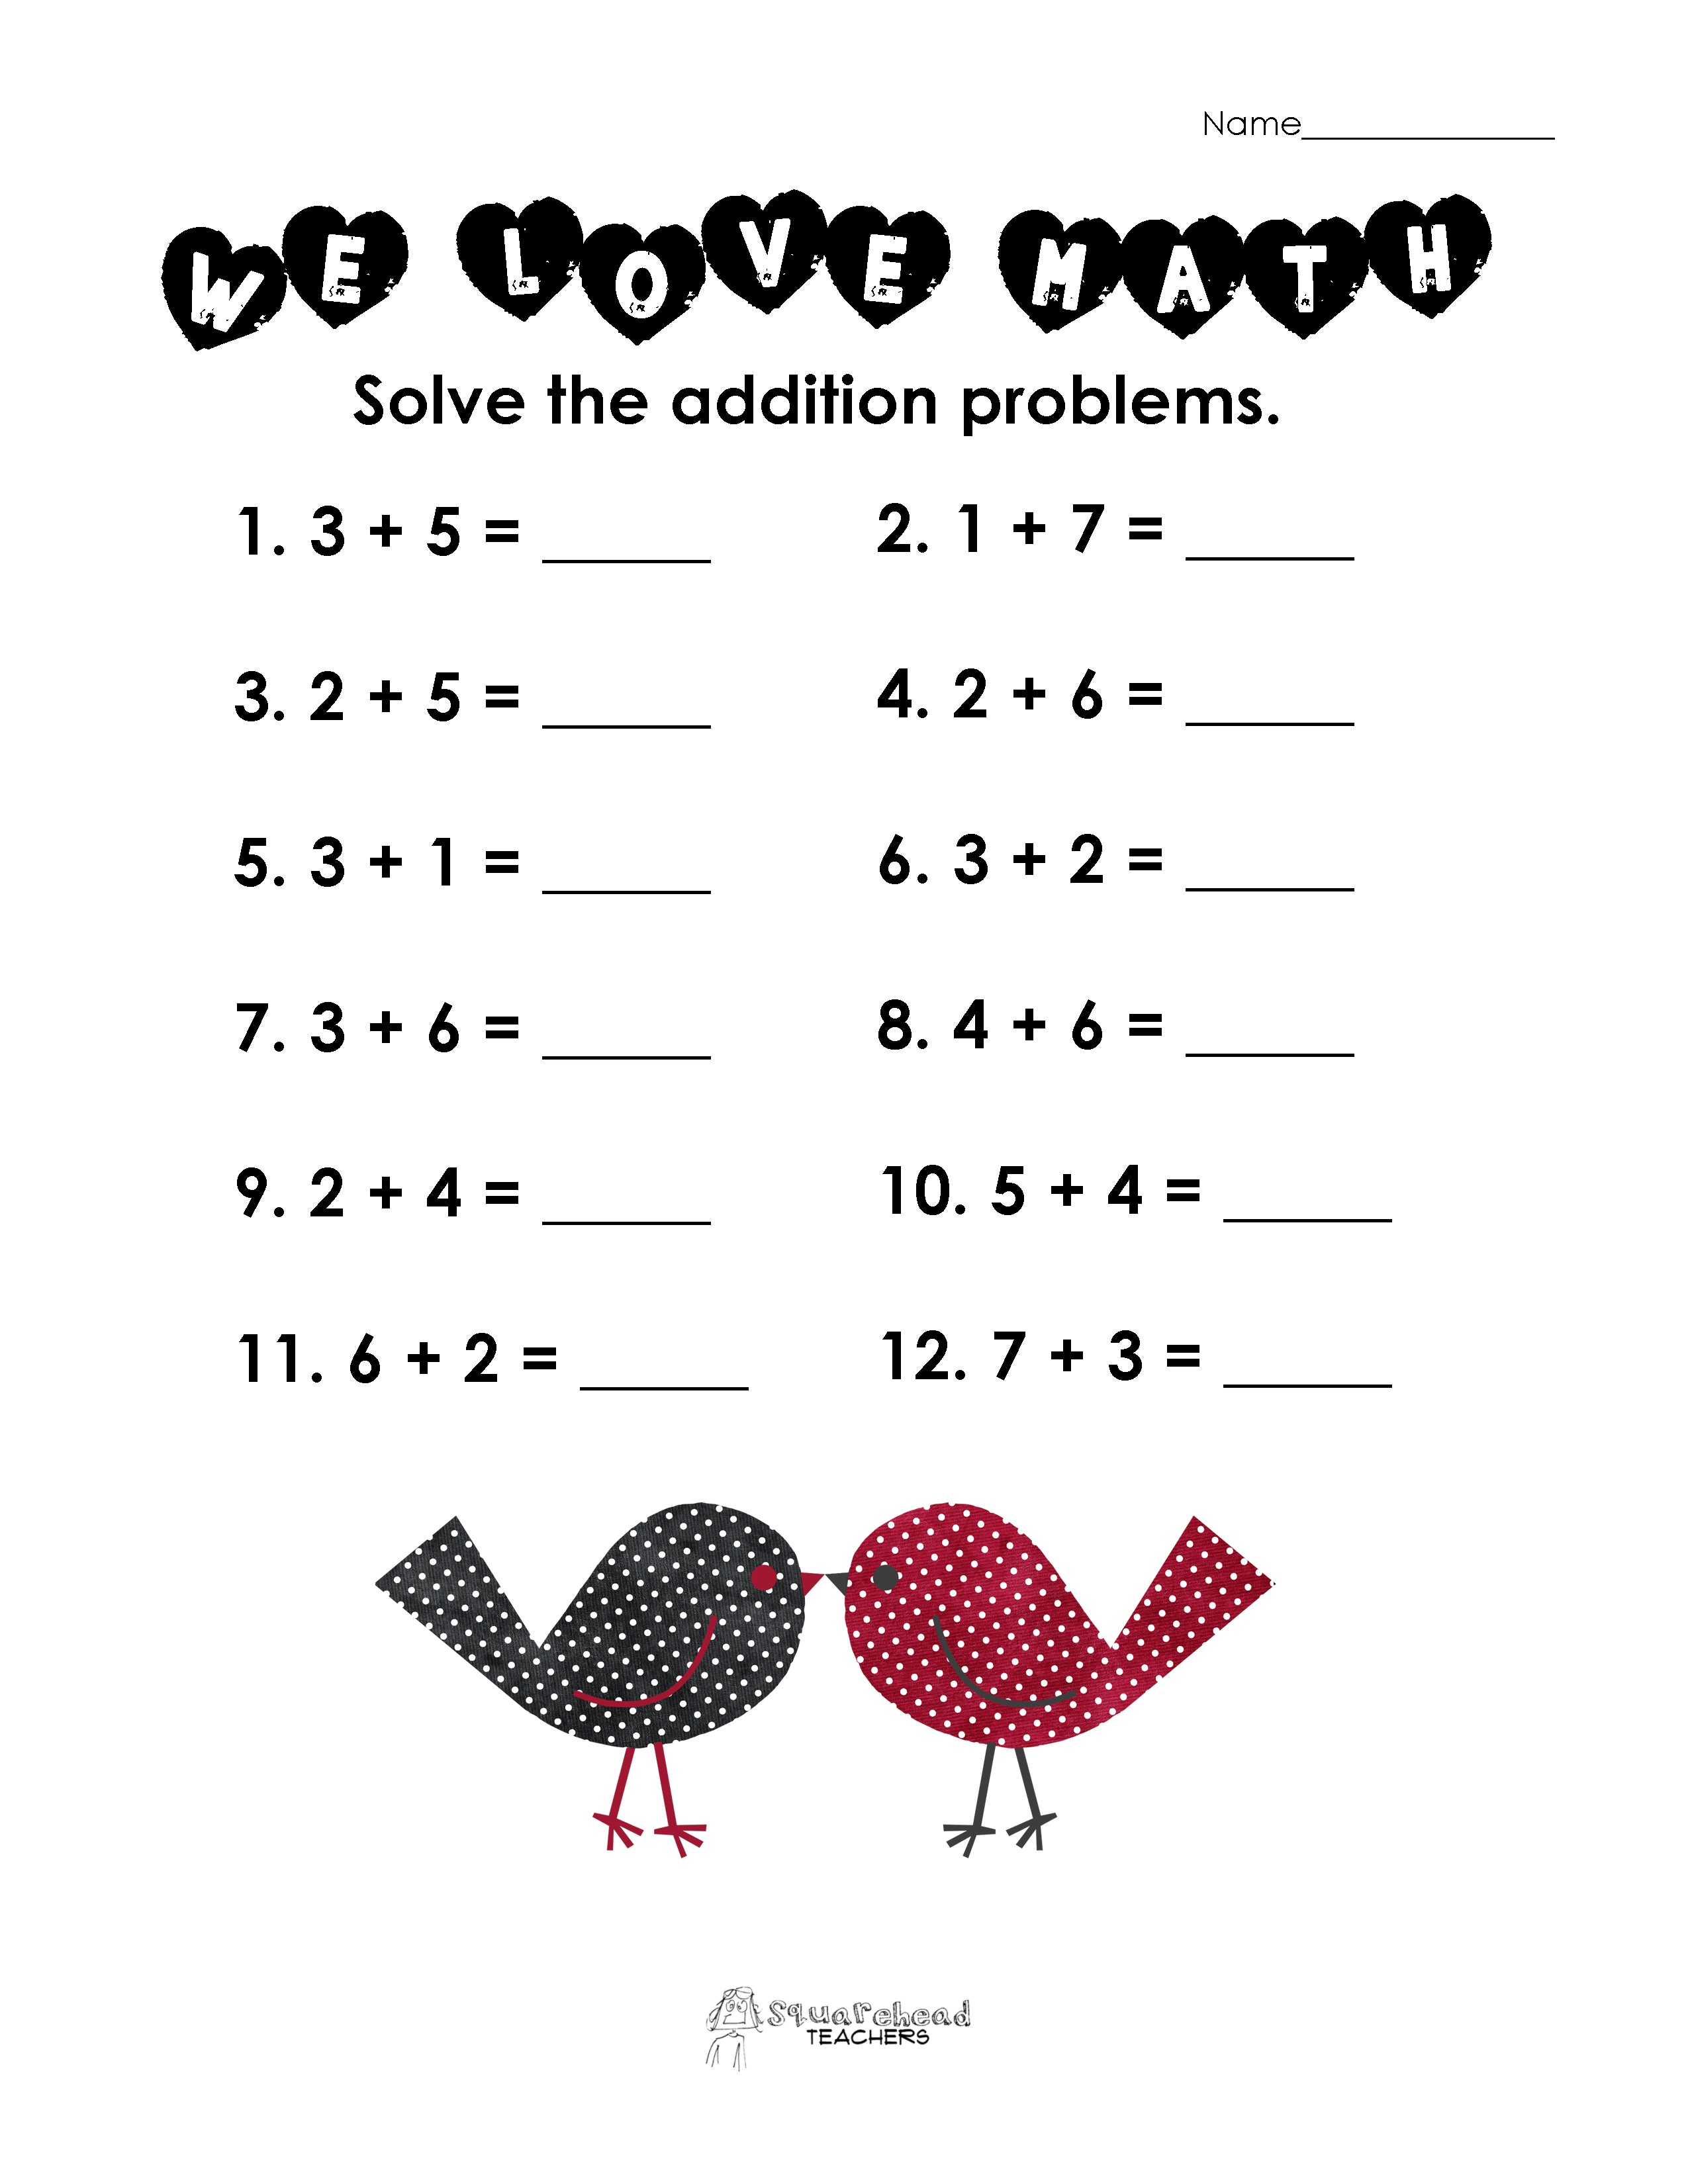 Valentine's Day Math Simple Addition Worksheet | Squarehead Teachers - Free Printable Valentine Math Worksheets